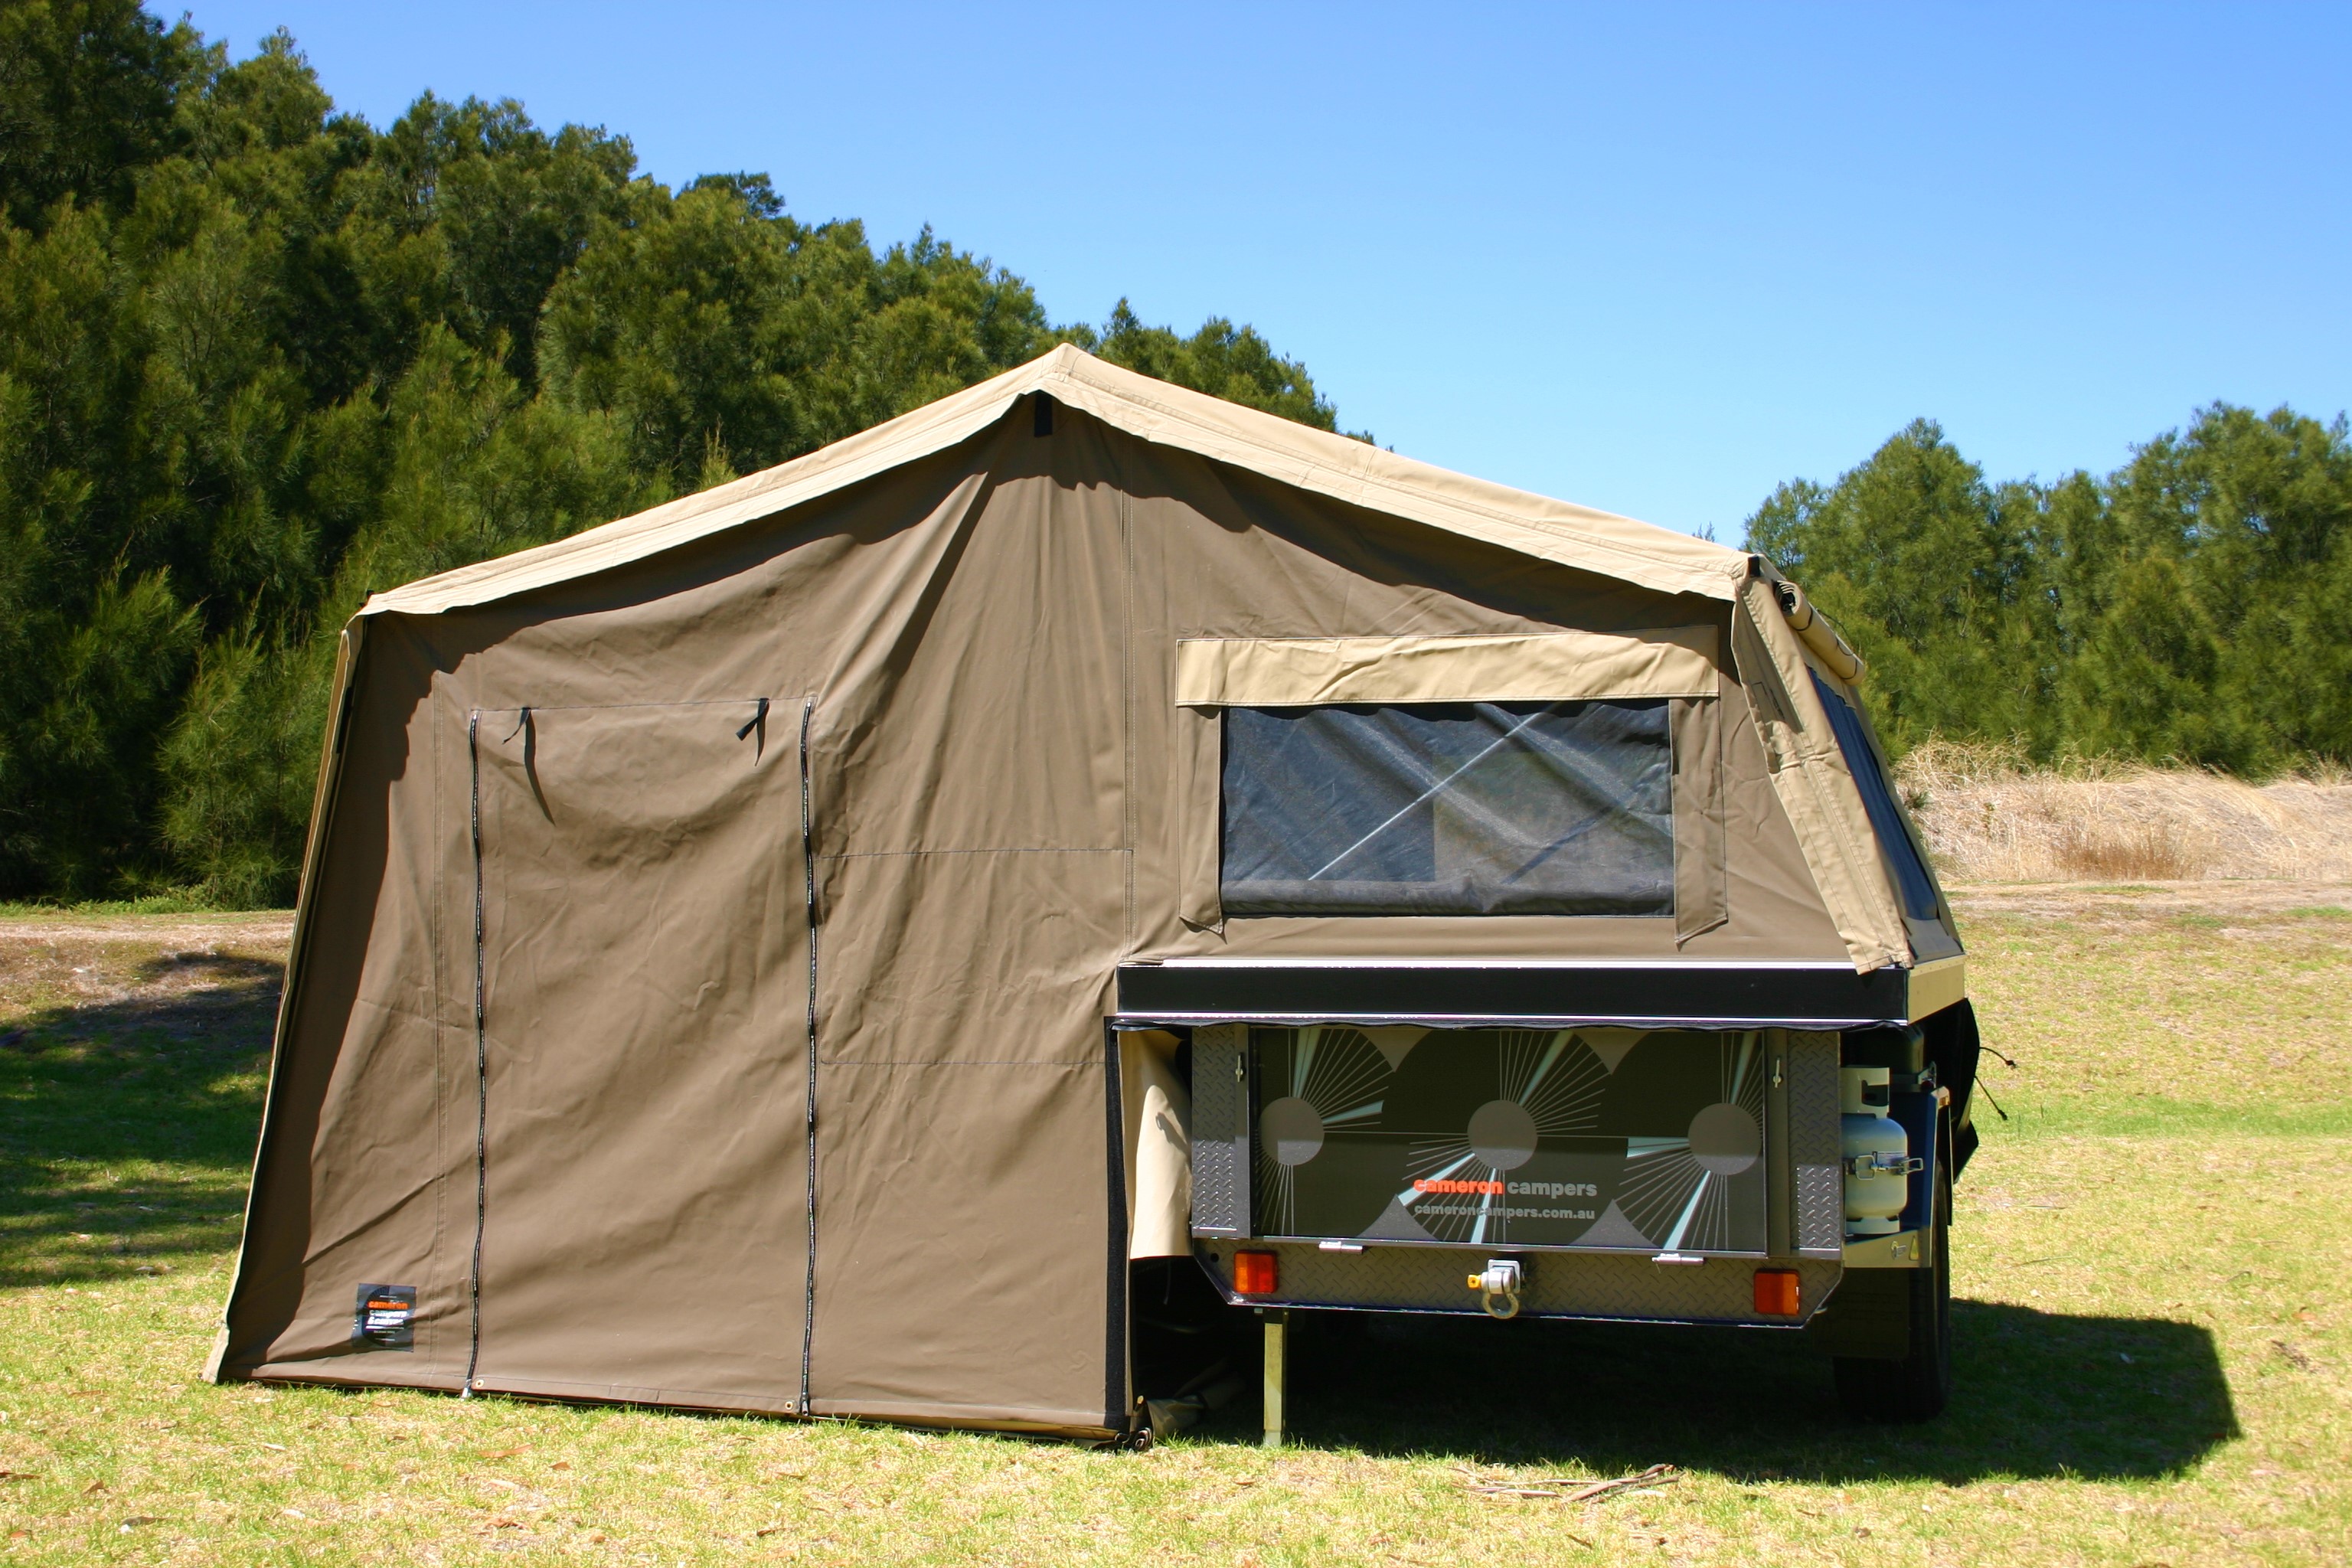 New and Used Caravans, Trailers, Tents, Camping Gear, Caravan